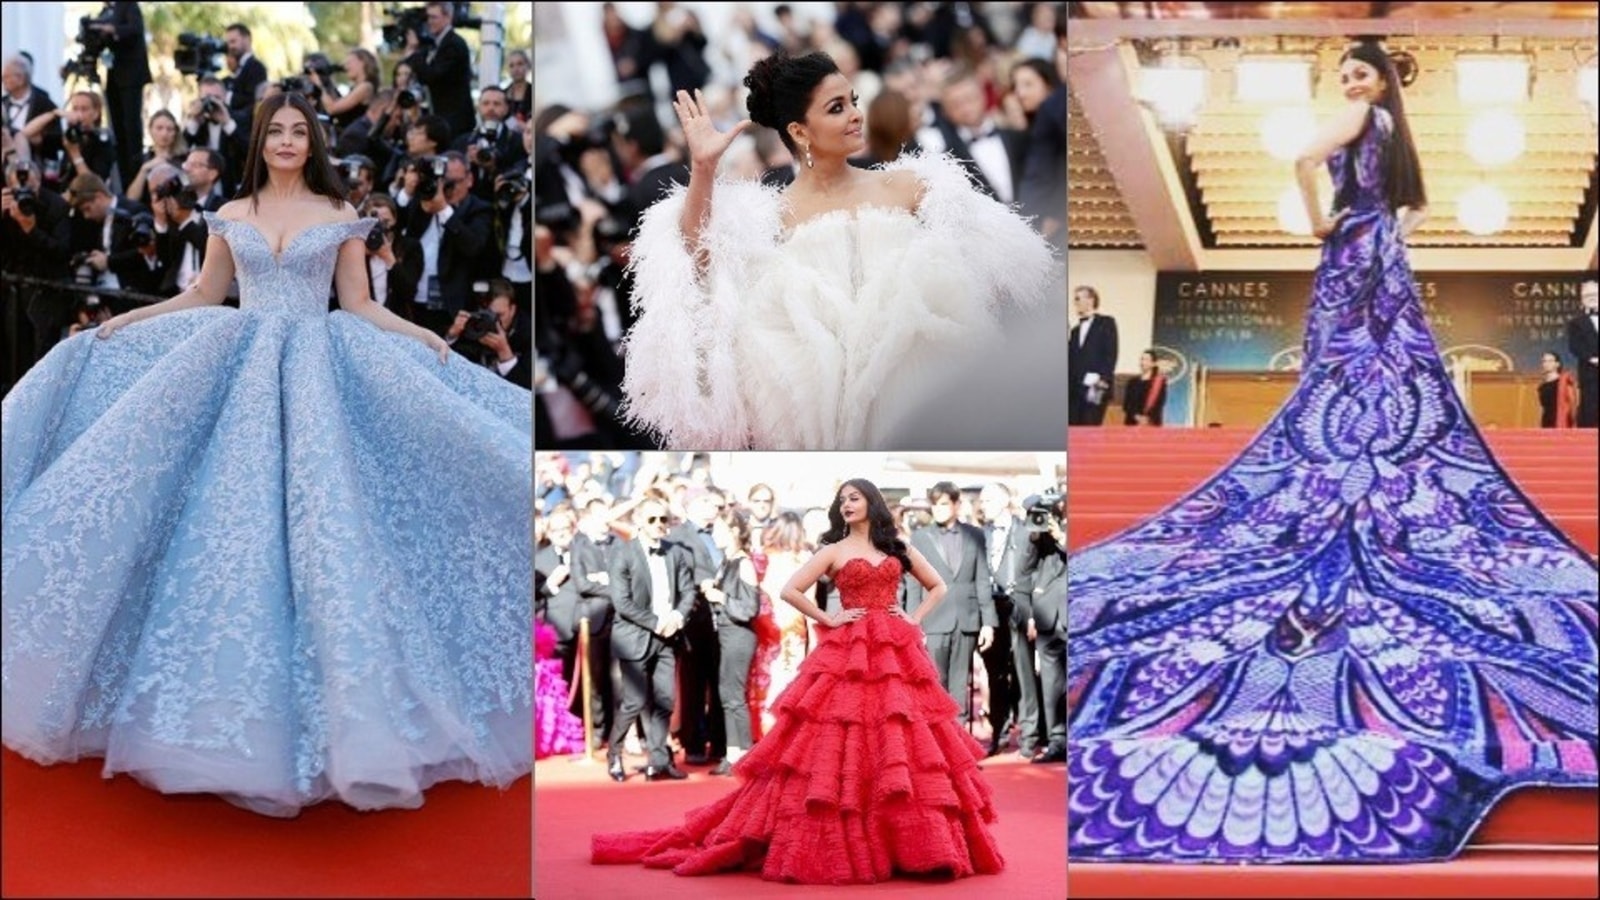 Bollywood Star Aishwarya Rai Look So Elegant on Cannes Red Carpet!: Photo  4081994 | 2018 Cannes Film Festival, Aishwarya Rai Photos | Just Jared:  Entertainment News